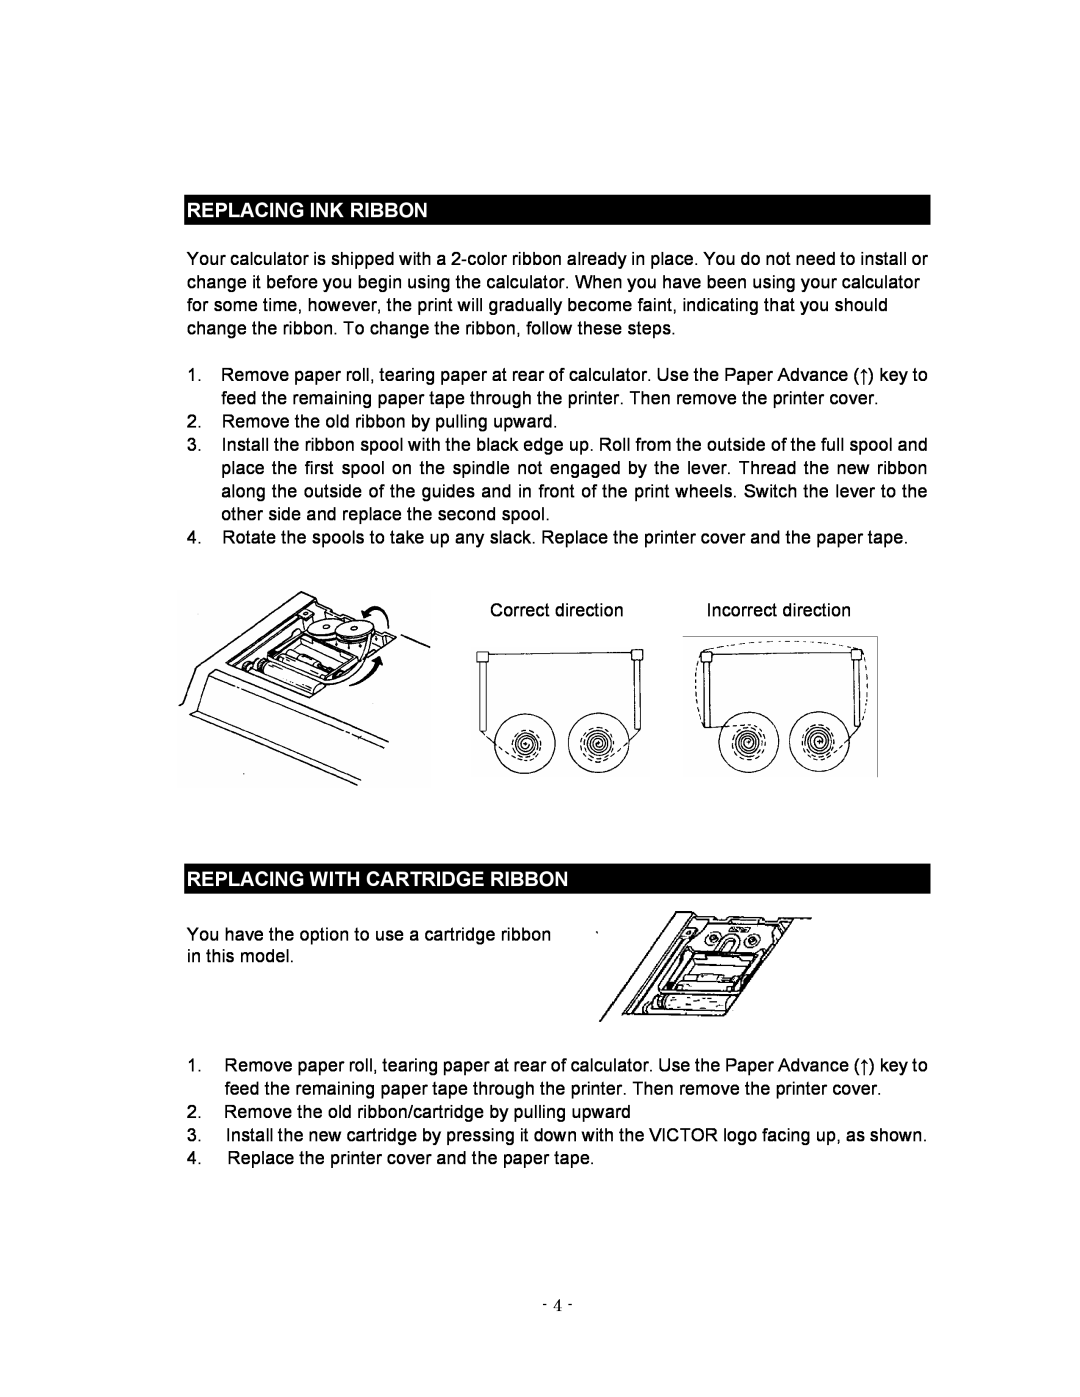 Victor 1280-7 USB manual Replacing Ink Ribbon, Replacing With Cartridge Ribbon 